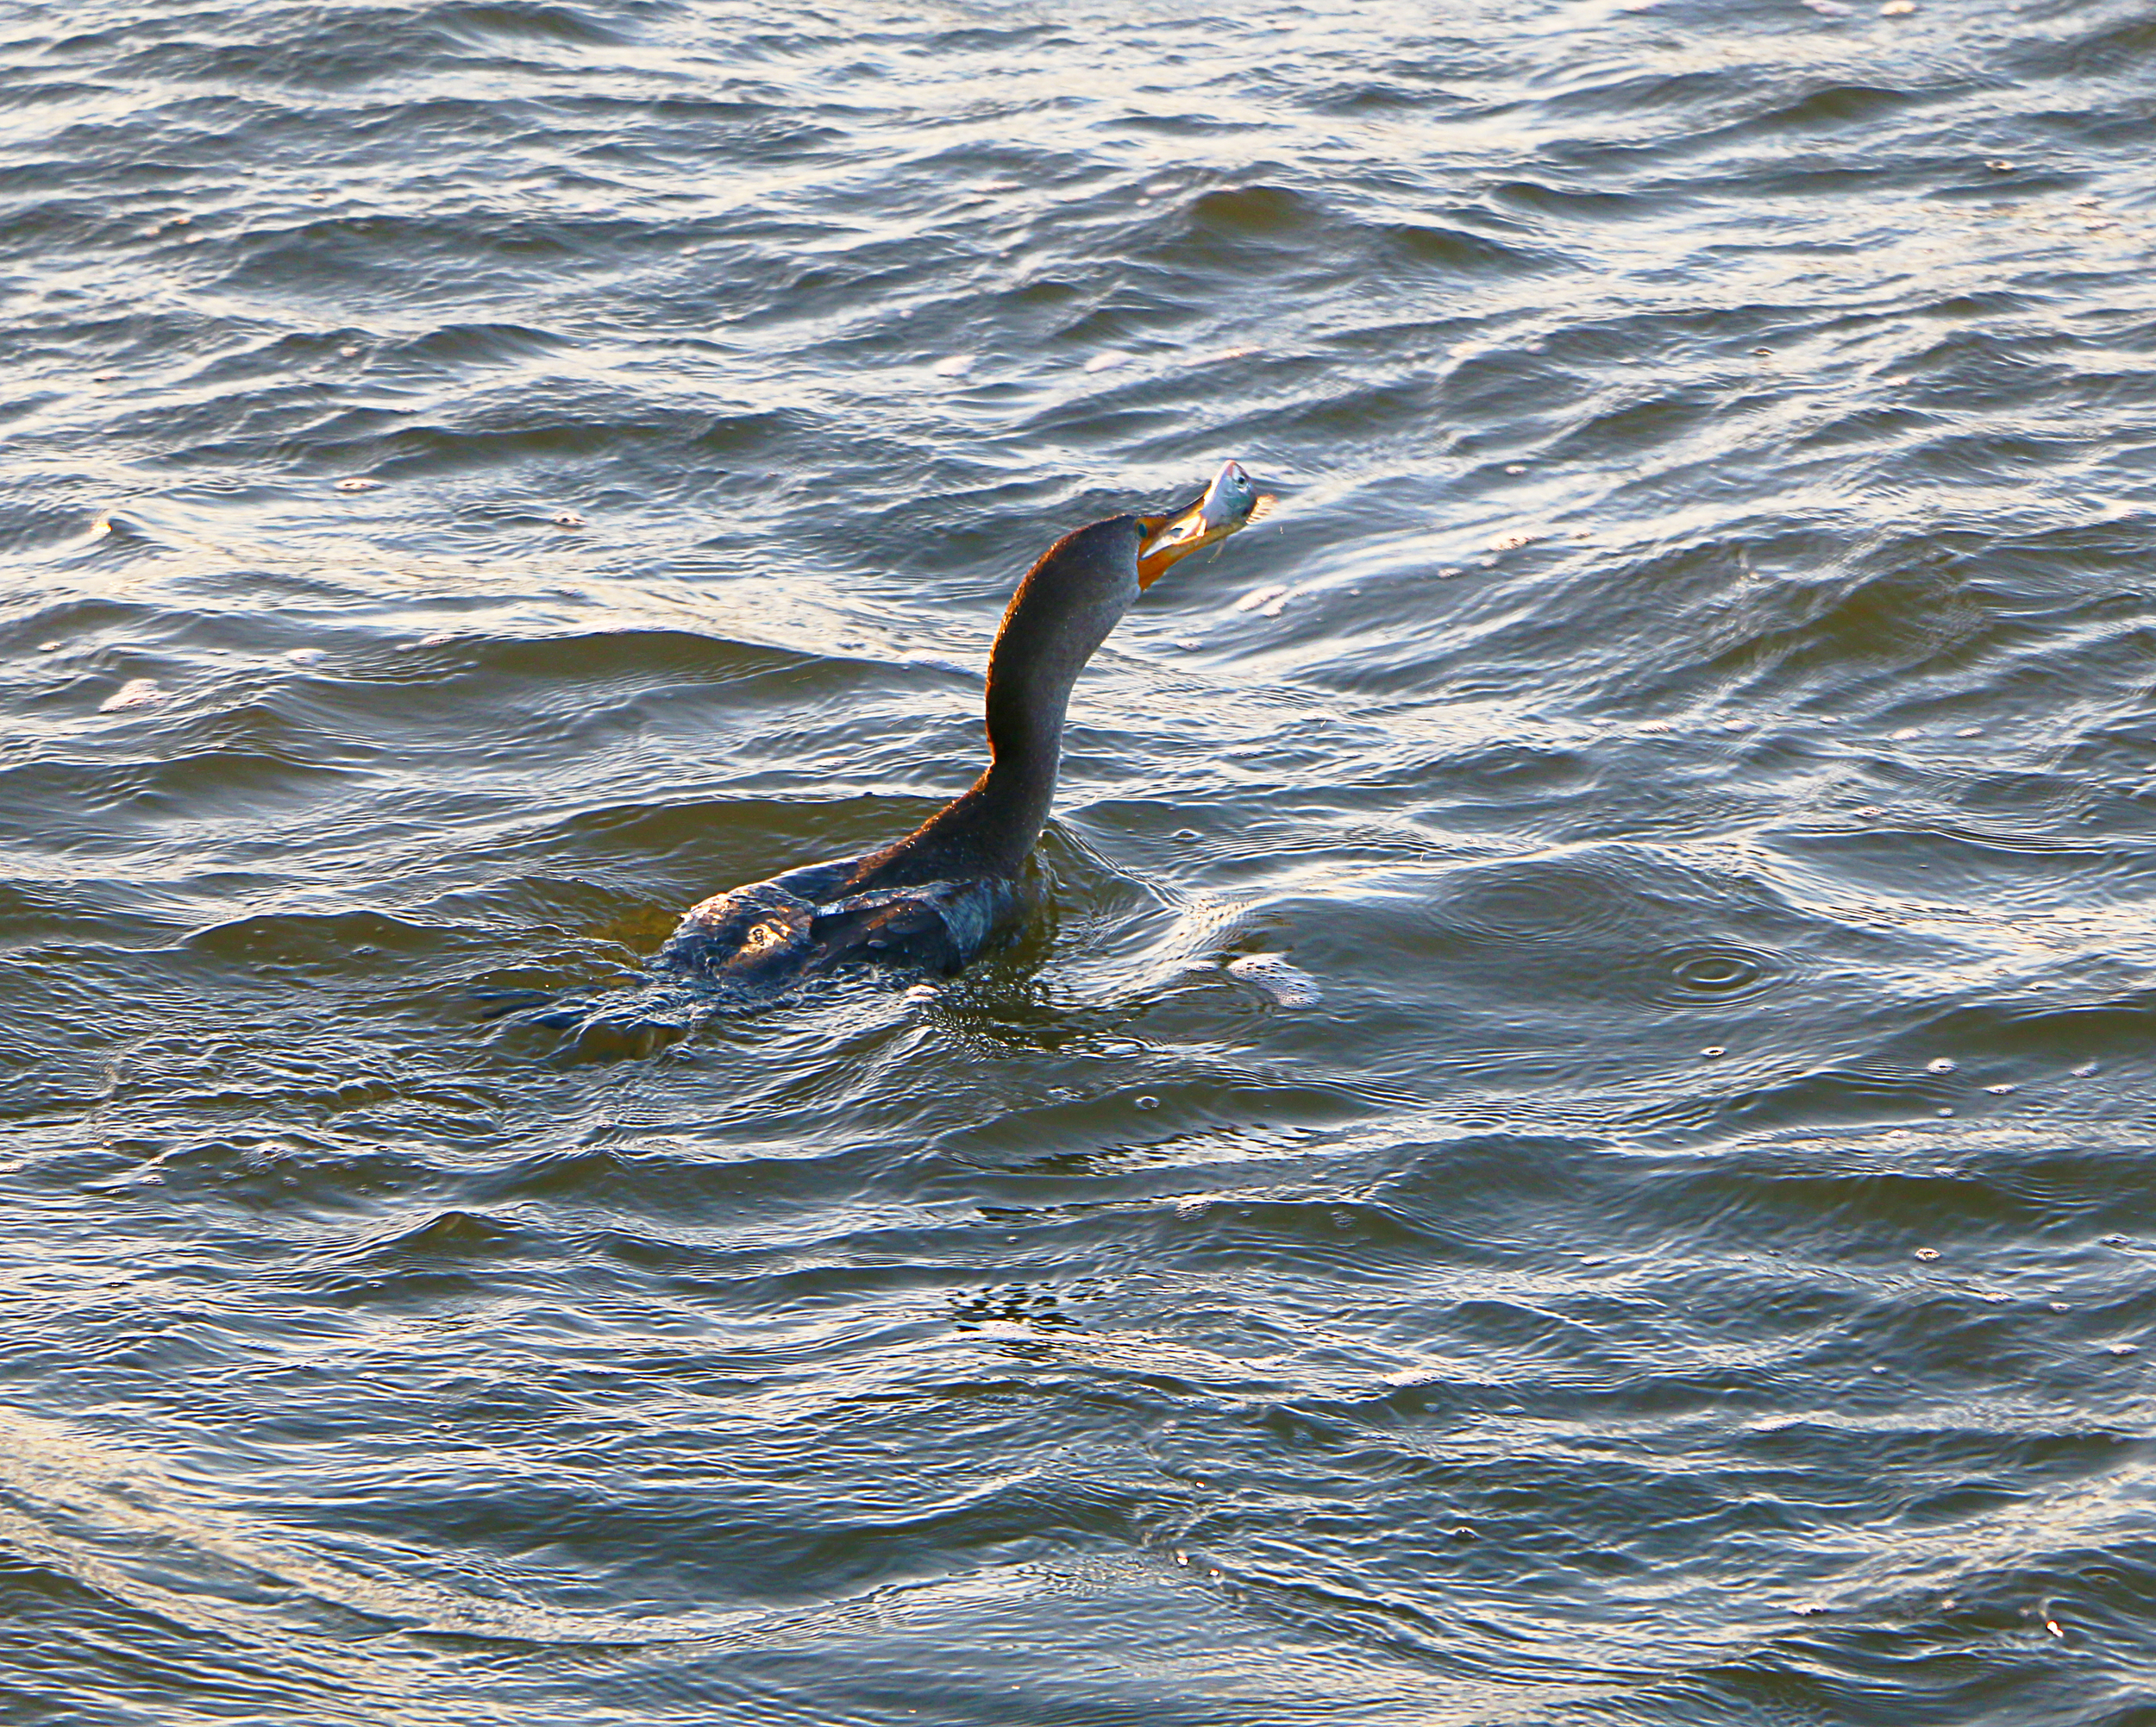 Cormorant with a successful catch!